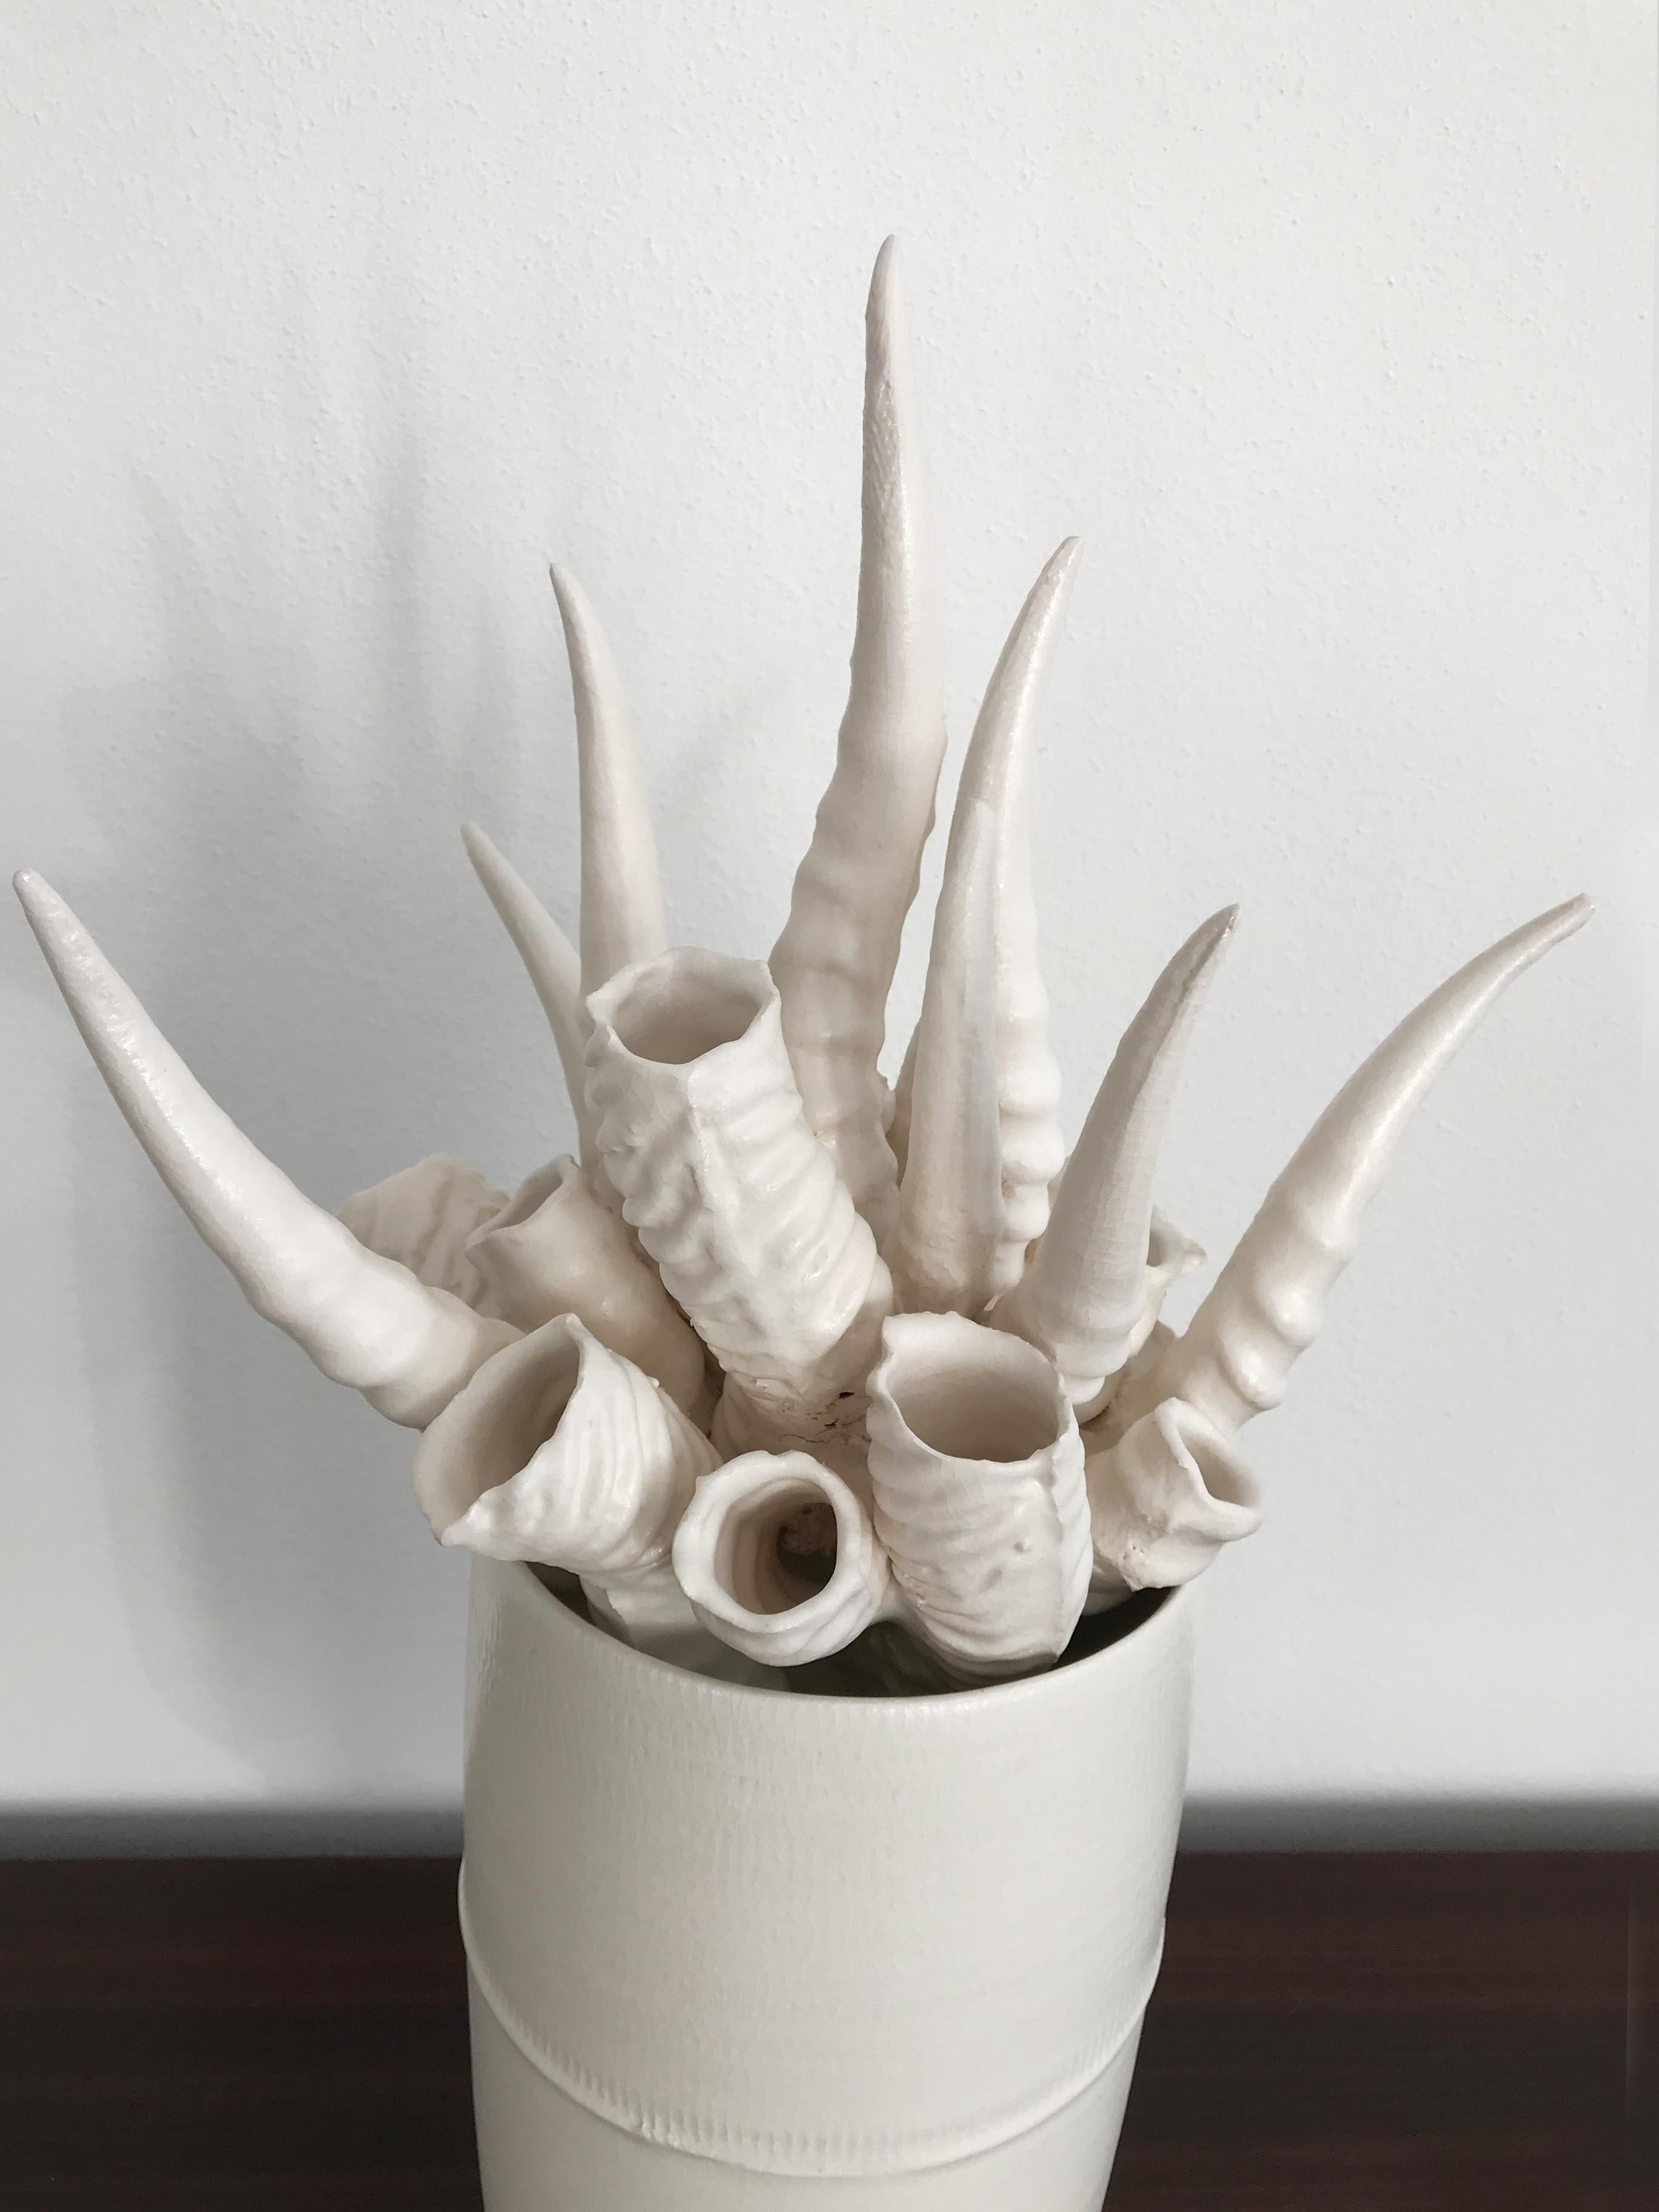 Italian Contemporary Artistic Ceramic Canopo Vase by Amaaro, 2022 For Sale 2